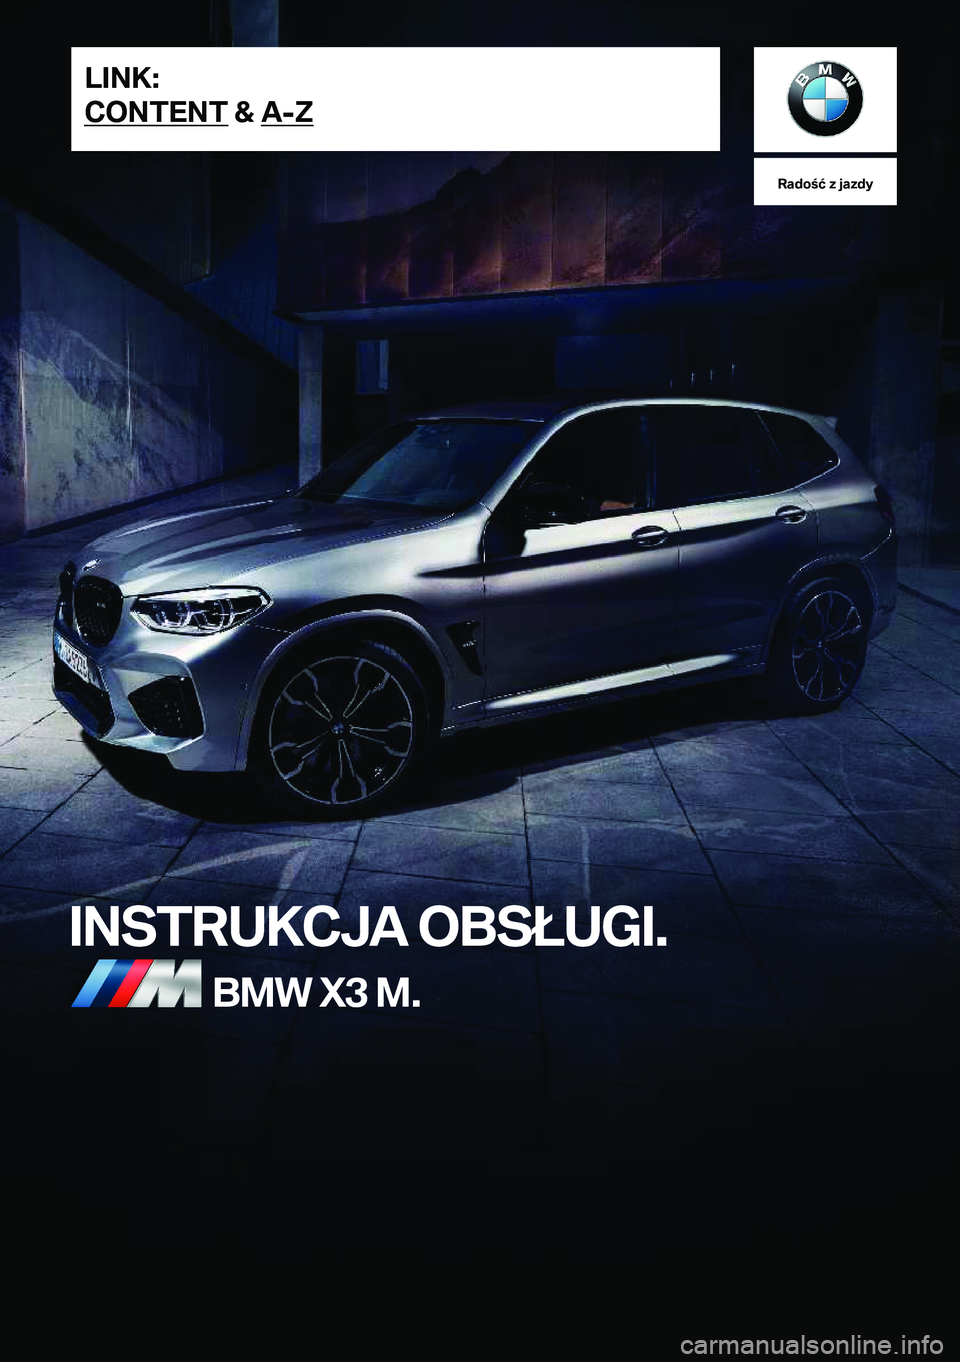 BMW X3 M 2020  Instrukcja obsługi (in Polish) �R�a�d�o�ć��z��j�a�z�d�y
�I�N�S�T�R�U�K�C�J�A��O�B�S�Ł�U�G�I�.�B�M�W��X�3��M�.�L�I�N�K�:
�C�O�N�T�E�N�T��&��A�-�Z�O�n�l�i�n�e��E�d�i�t�i�o�n��f�o�r��P�a�r�t��n�o�.��0�1�4�0�2�6�6�6�8�5